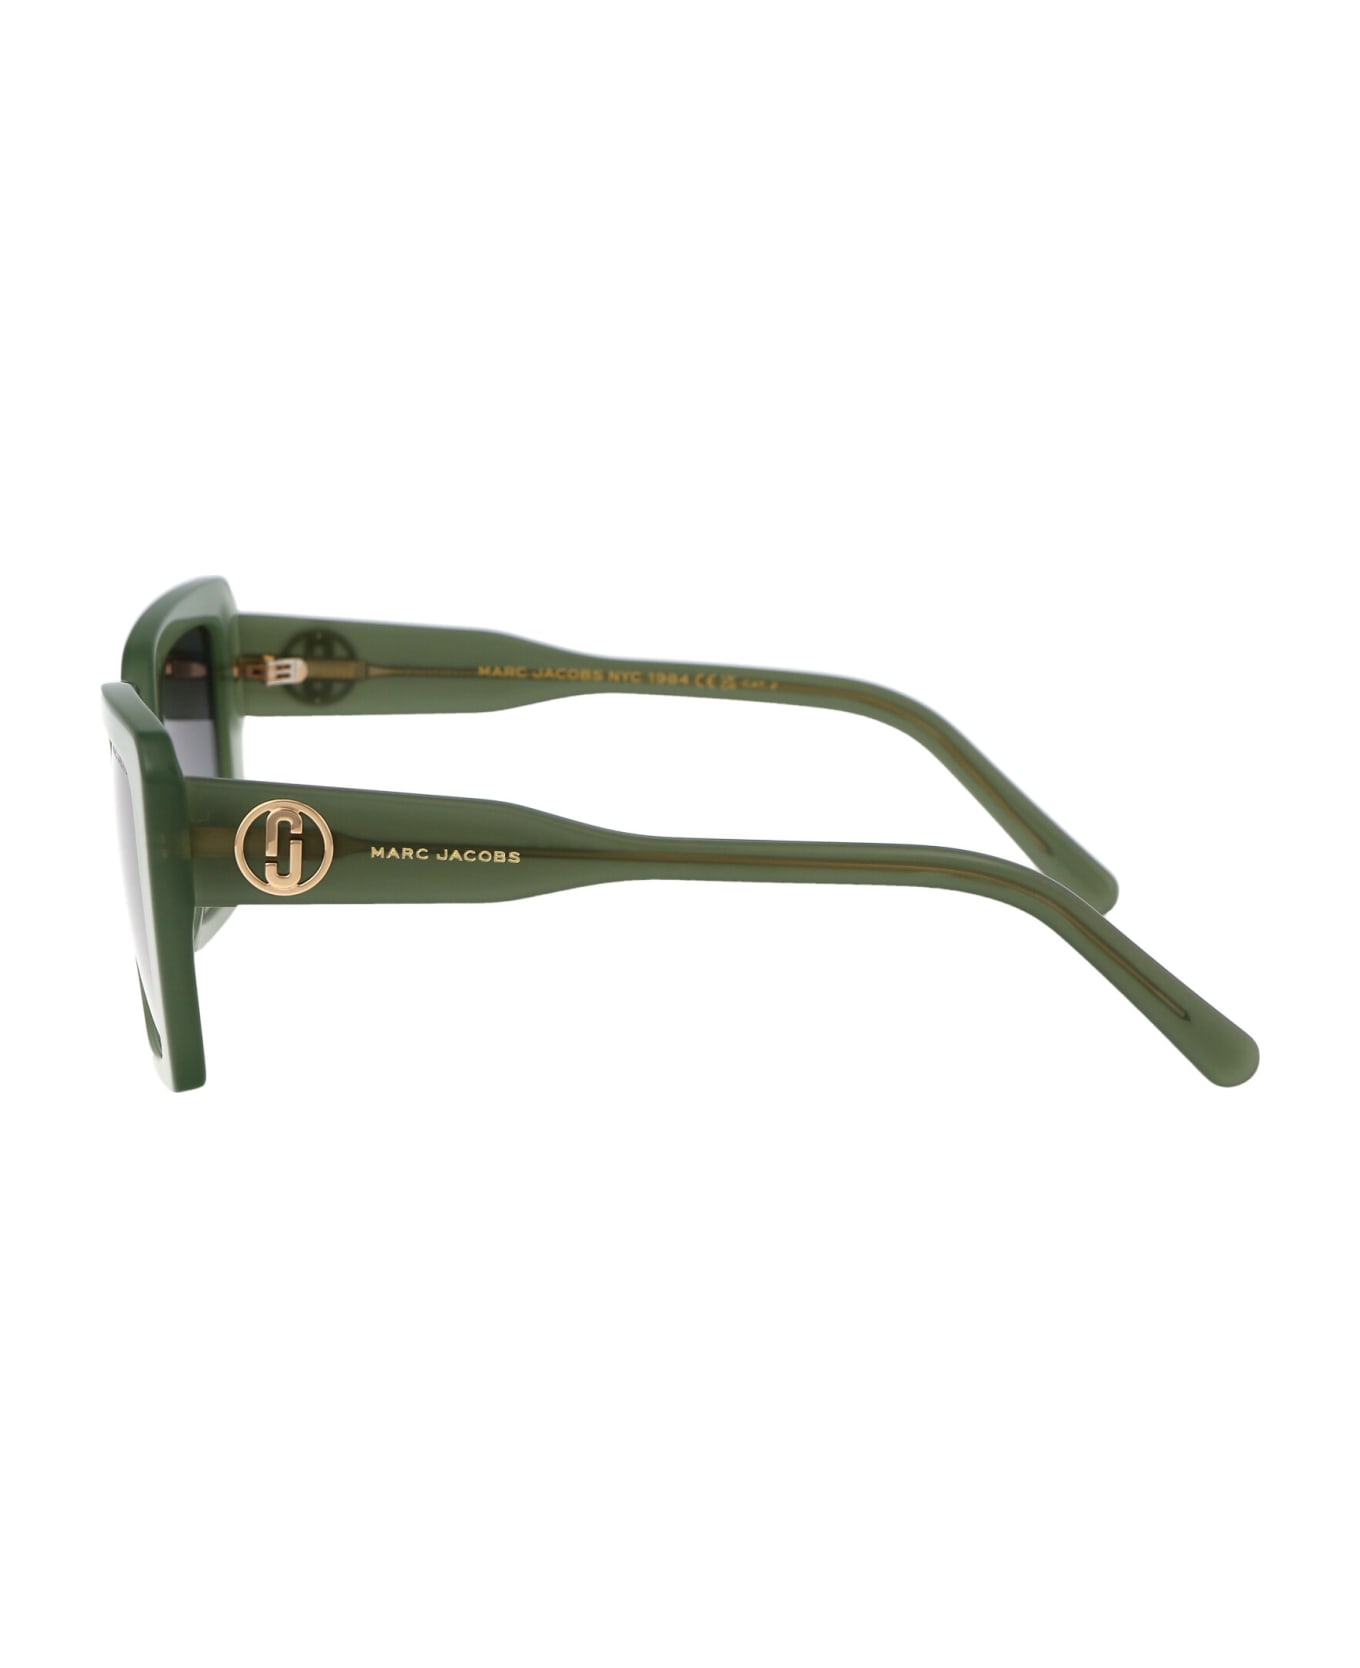 Marc Jacobs Eyewear Marc 733/s Sunglasses - 1EDGB GREEN サングラス